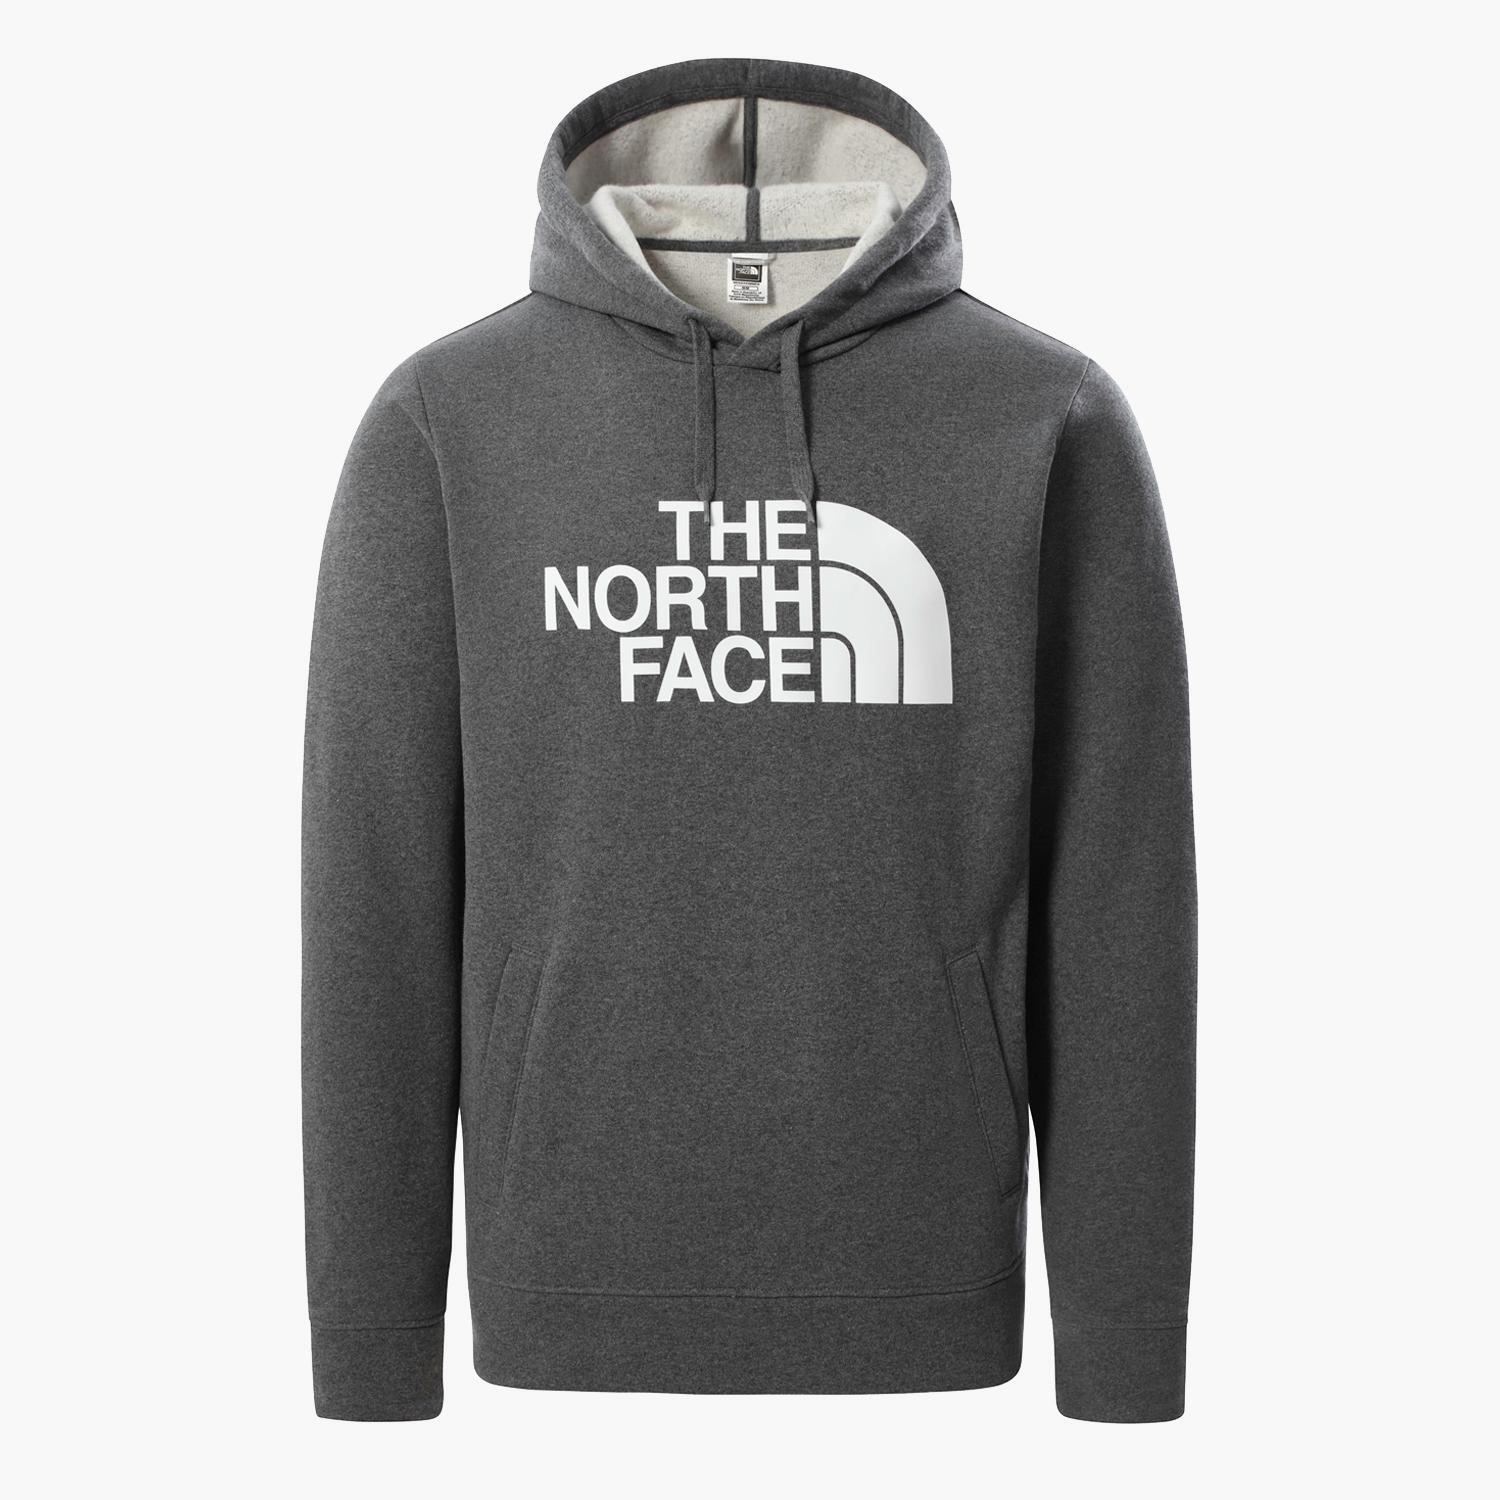 Sweatshirt The North Face - Cinza - Montanha Homem tamanho M